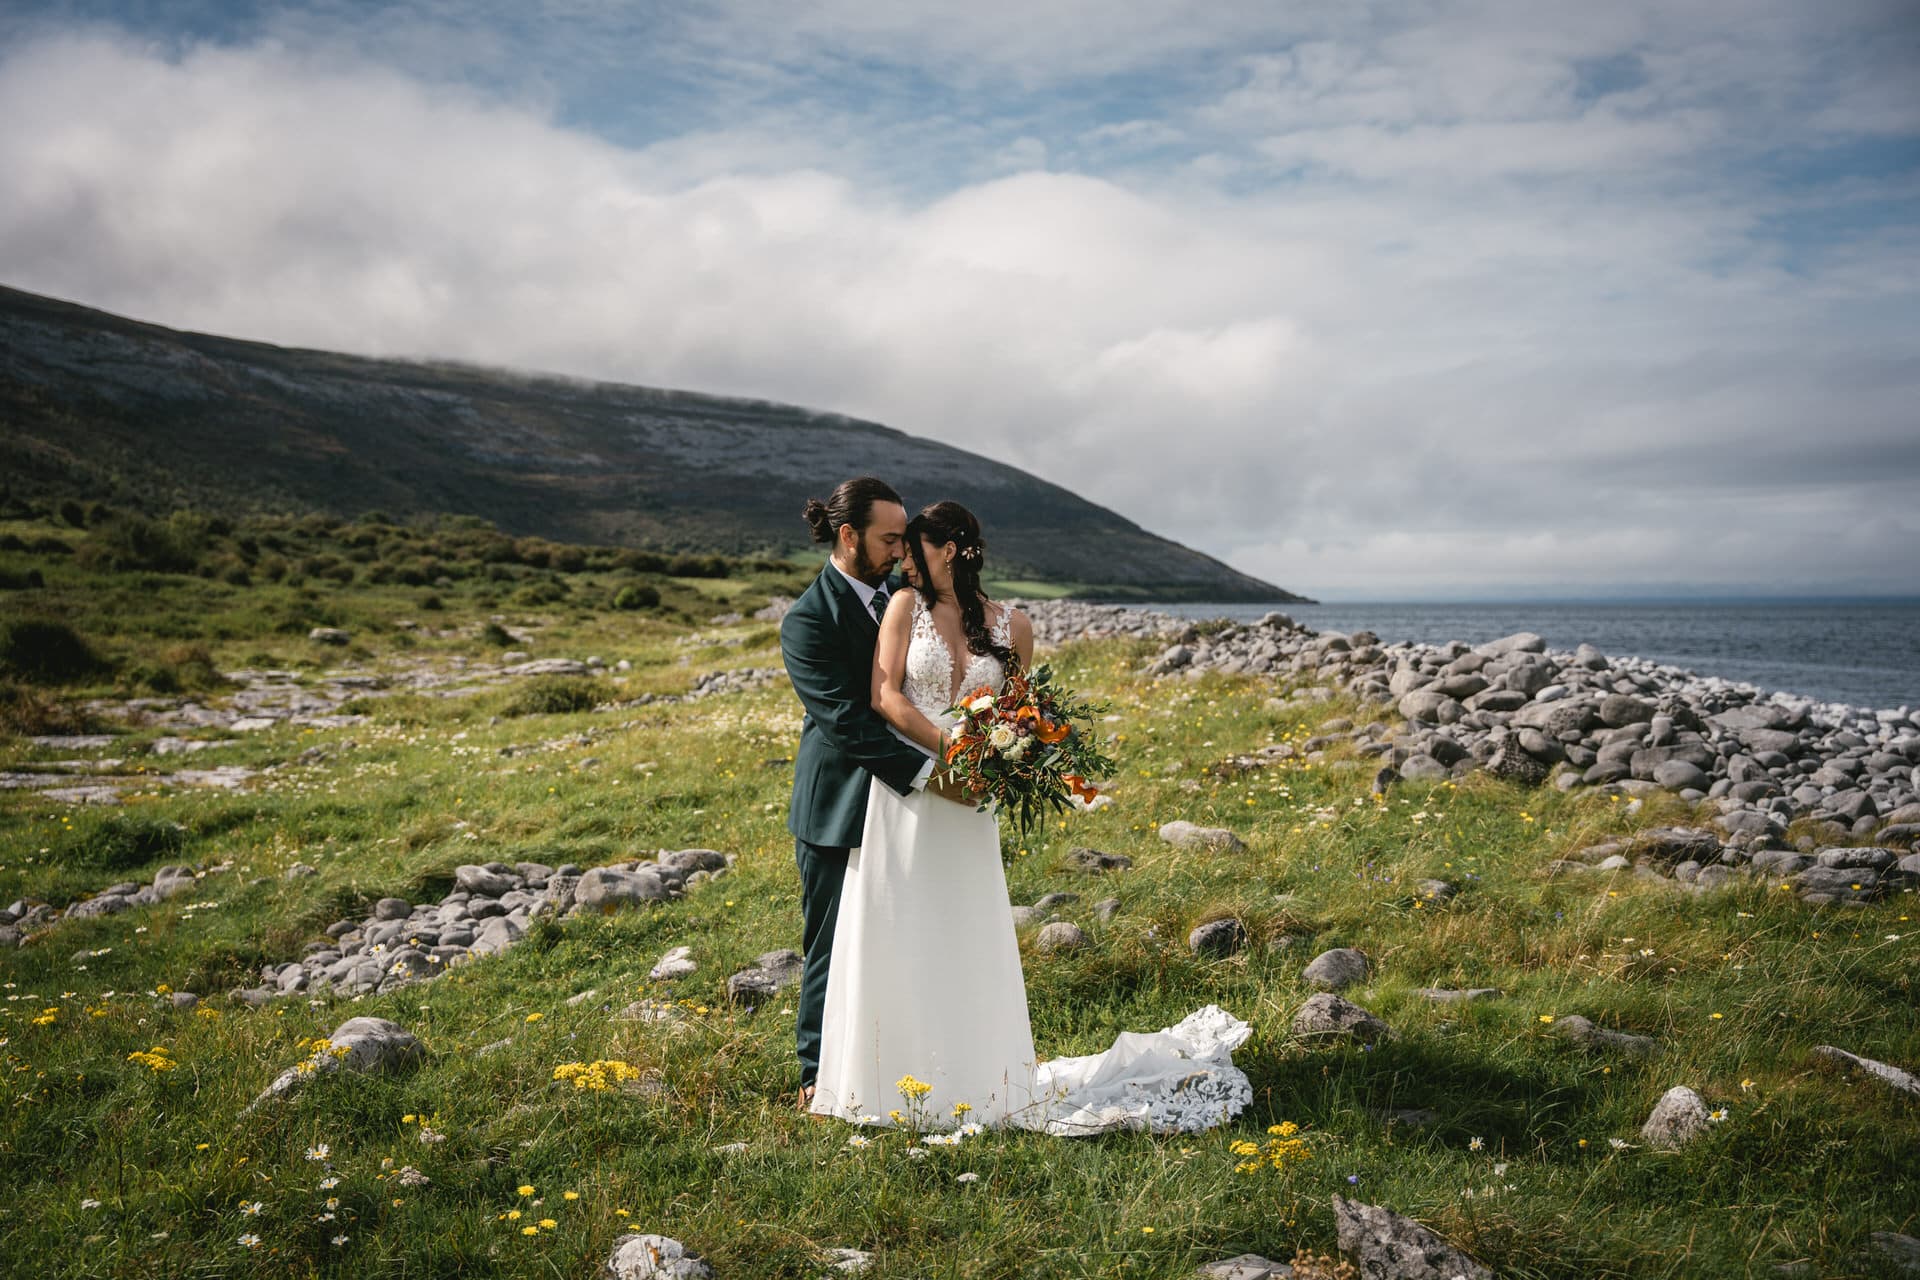 The misty Irish coast: A backdrop for their heartfelt vows.